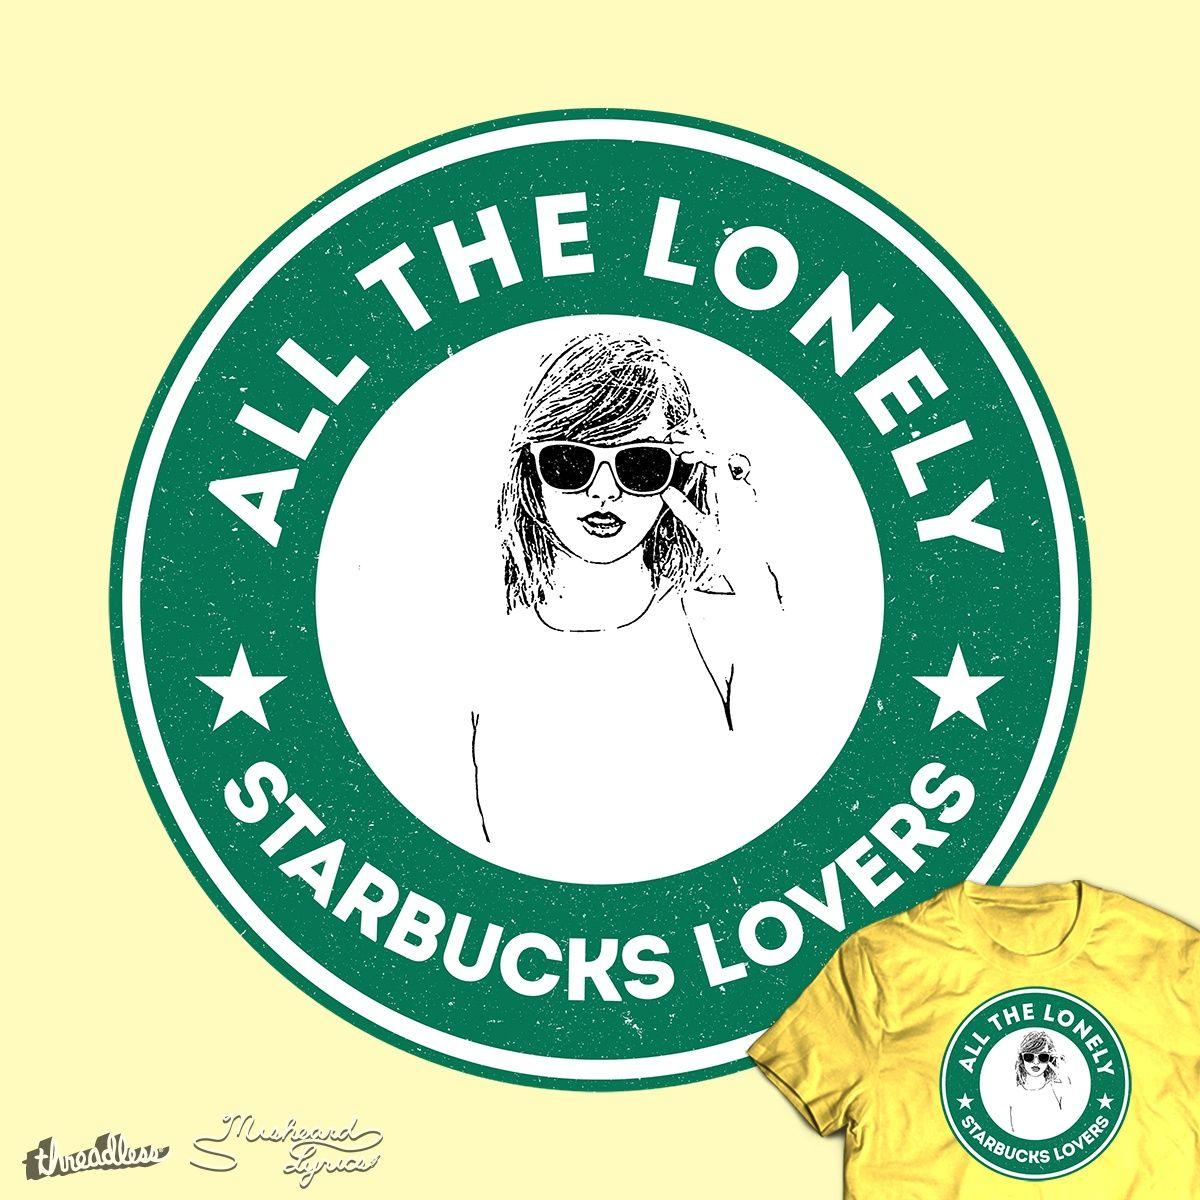 Blank Starbucks Logo - Score Starbucks Lovers by IAApparel on Threadless